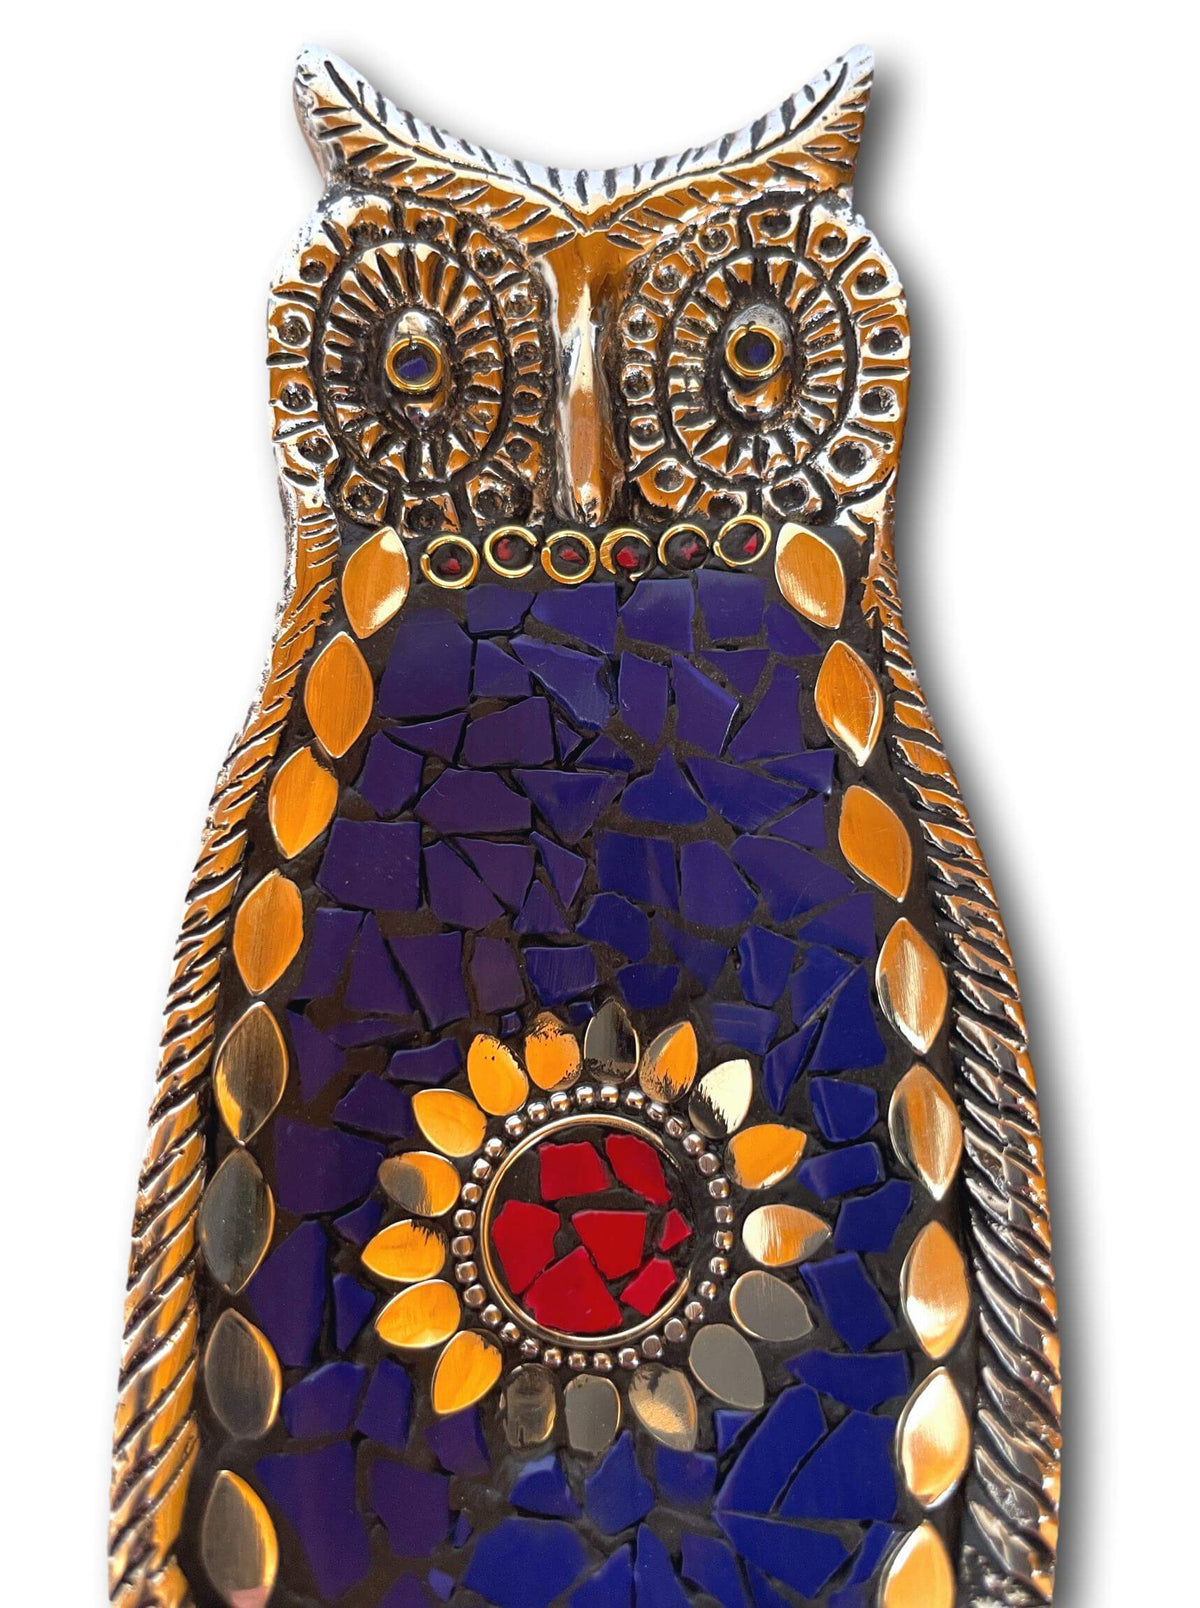 Wise Owl 🦉 Incense Burner - Handmade In India 🇮🇳